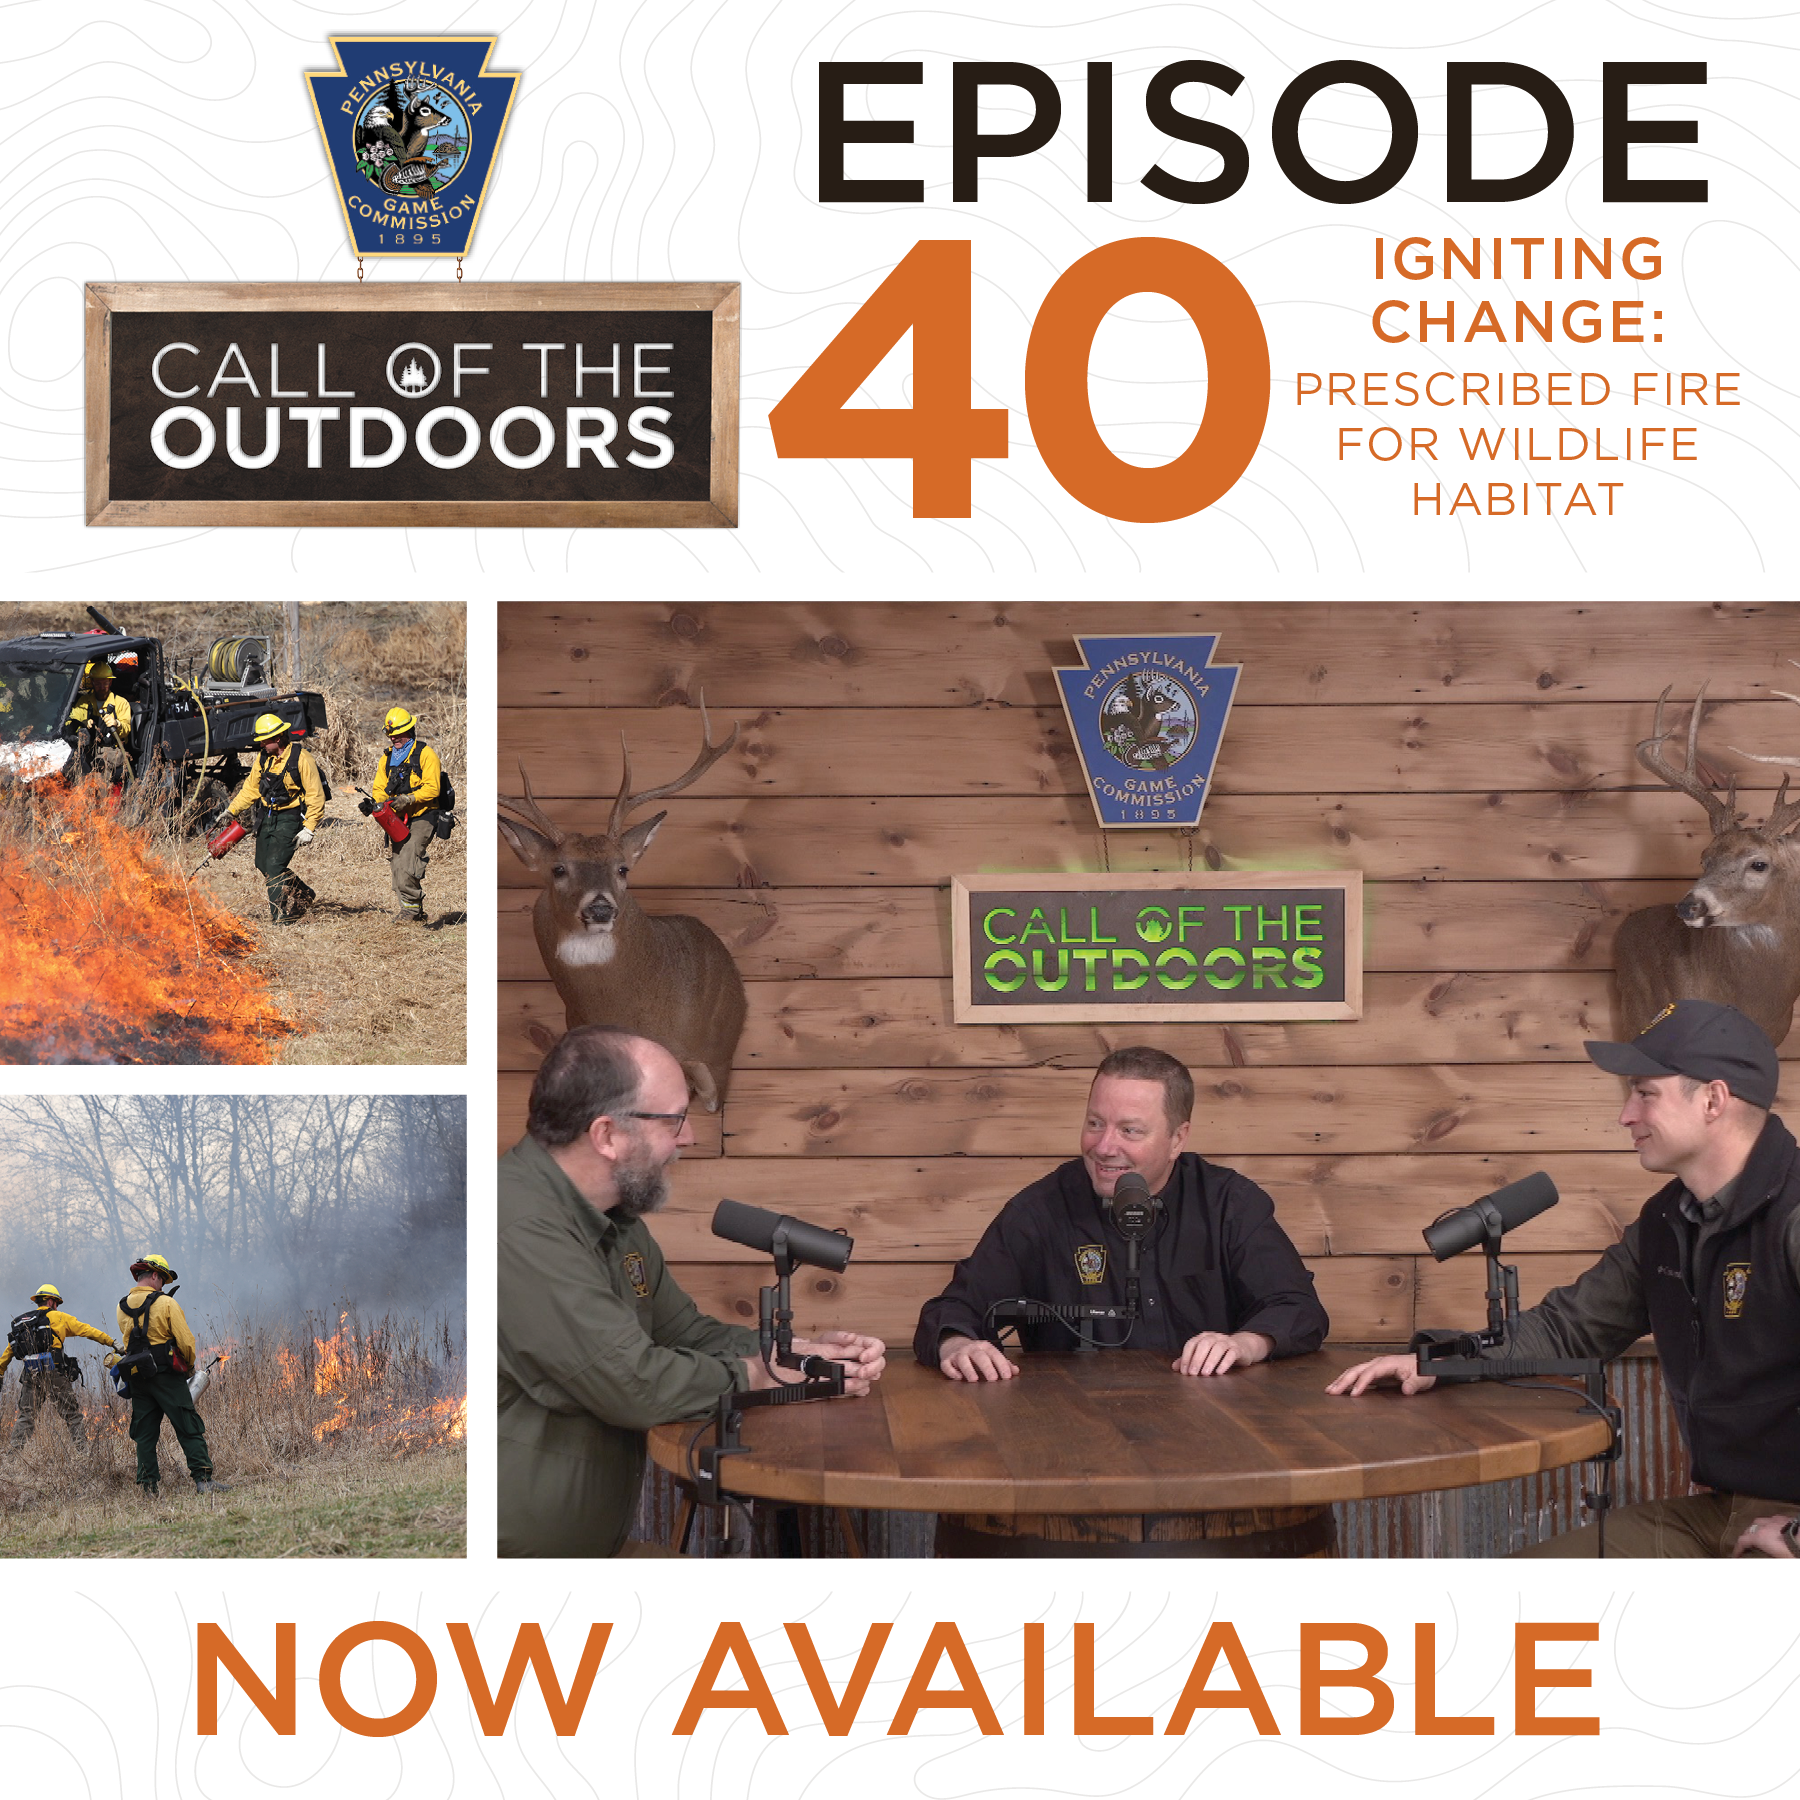 Episode 40: Igniting Change: Prescribed Fire for Wildlife Habitat